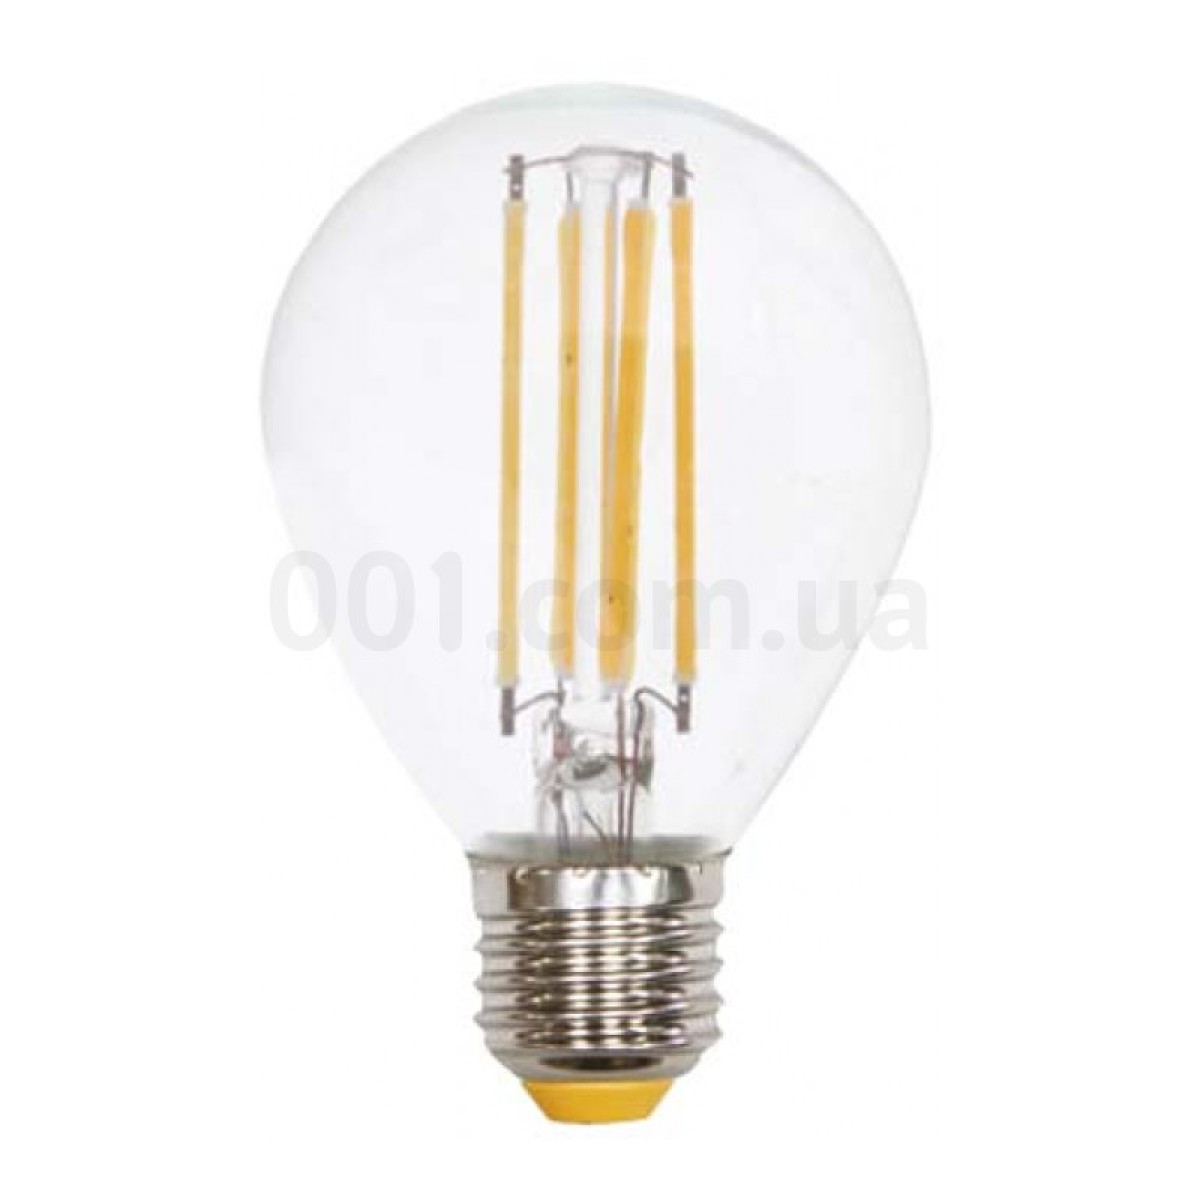 Светодиодная лампа LB-61 G45 (шар) филамент 4Вт 2700K E27, Feron 98_98.jpg